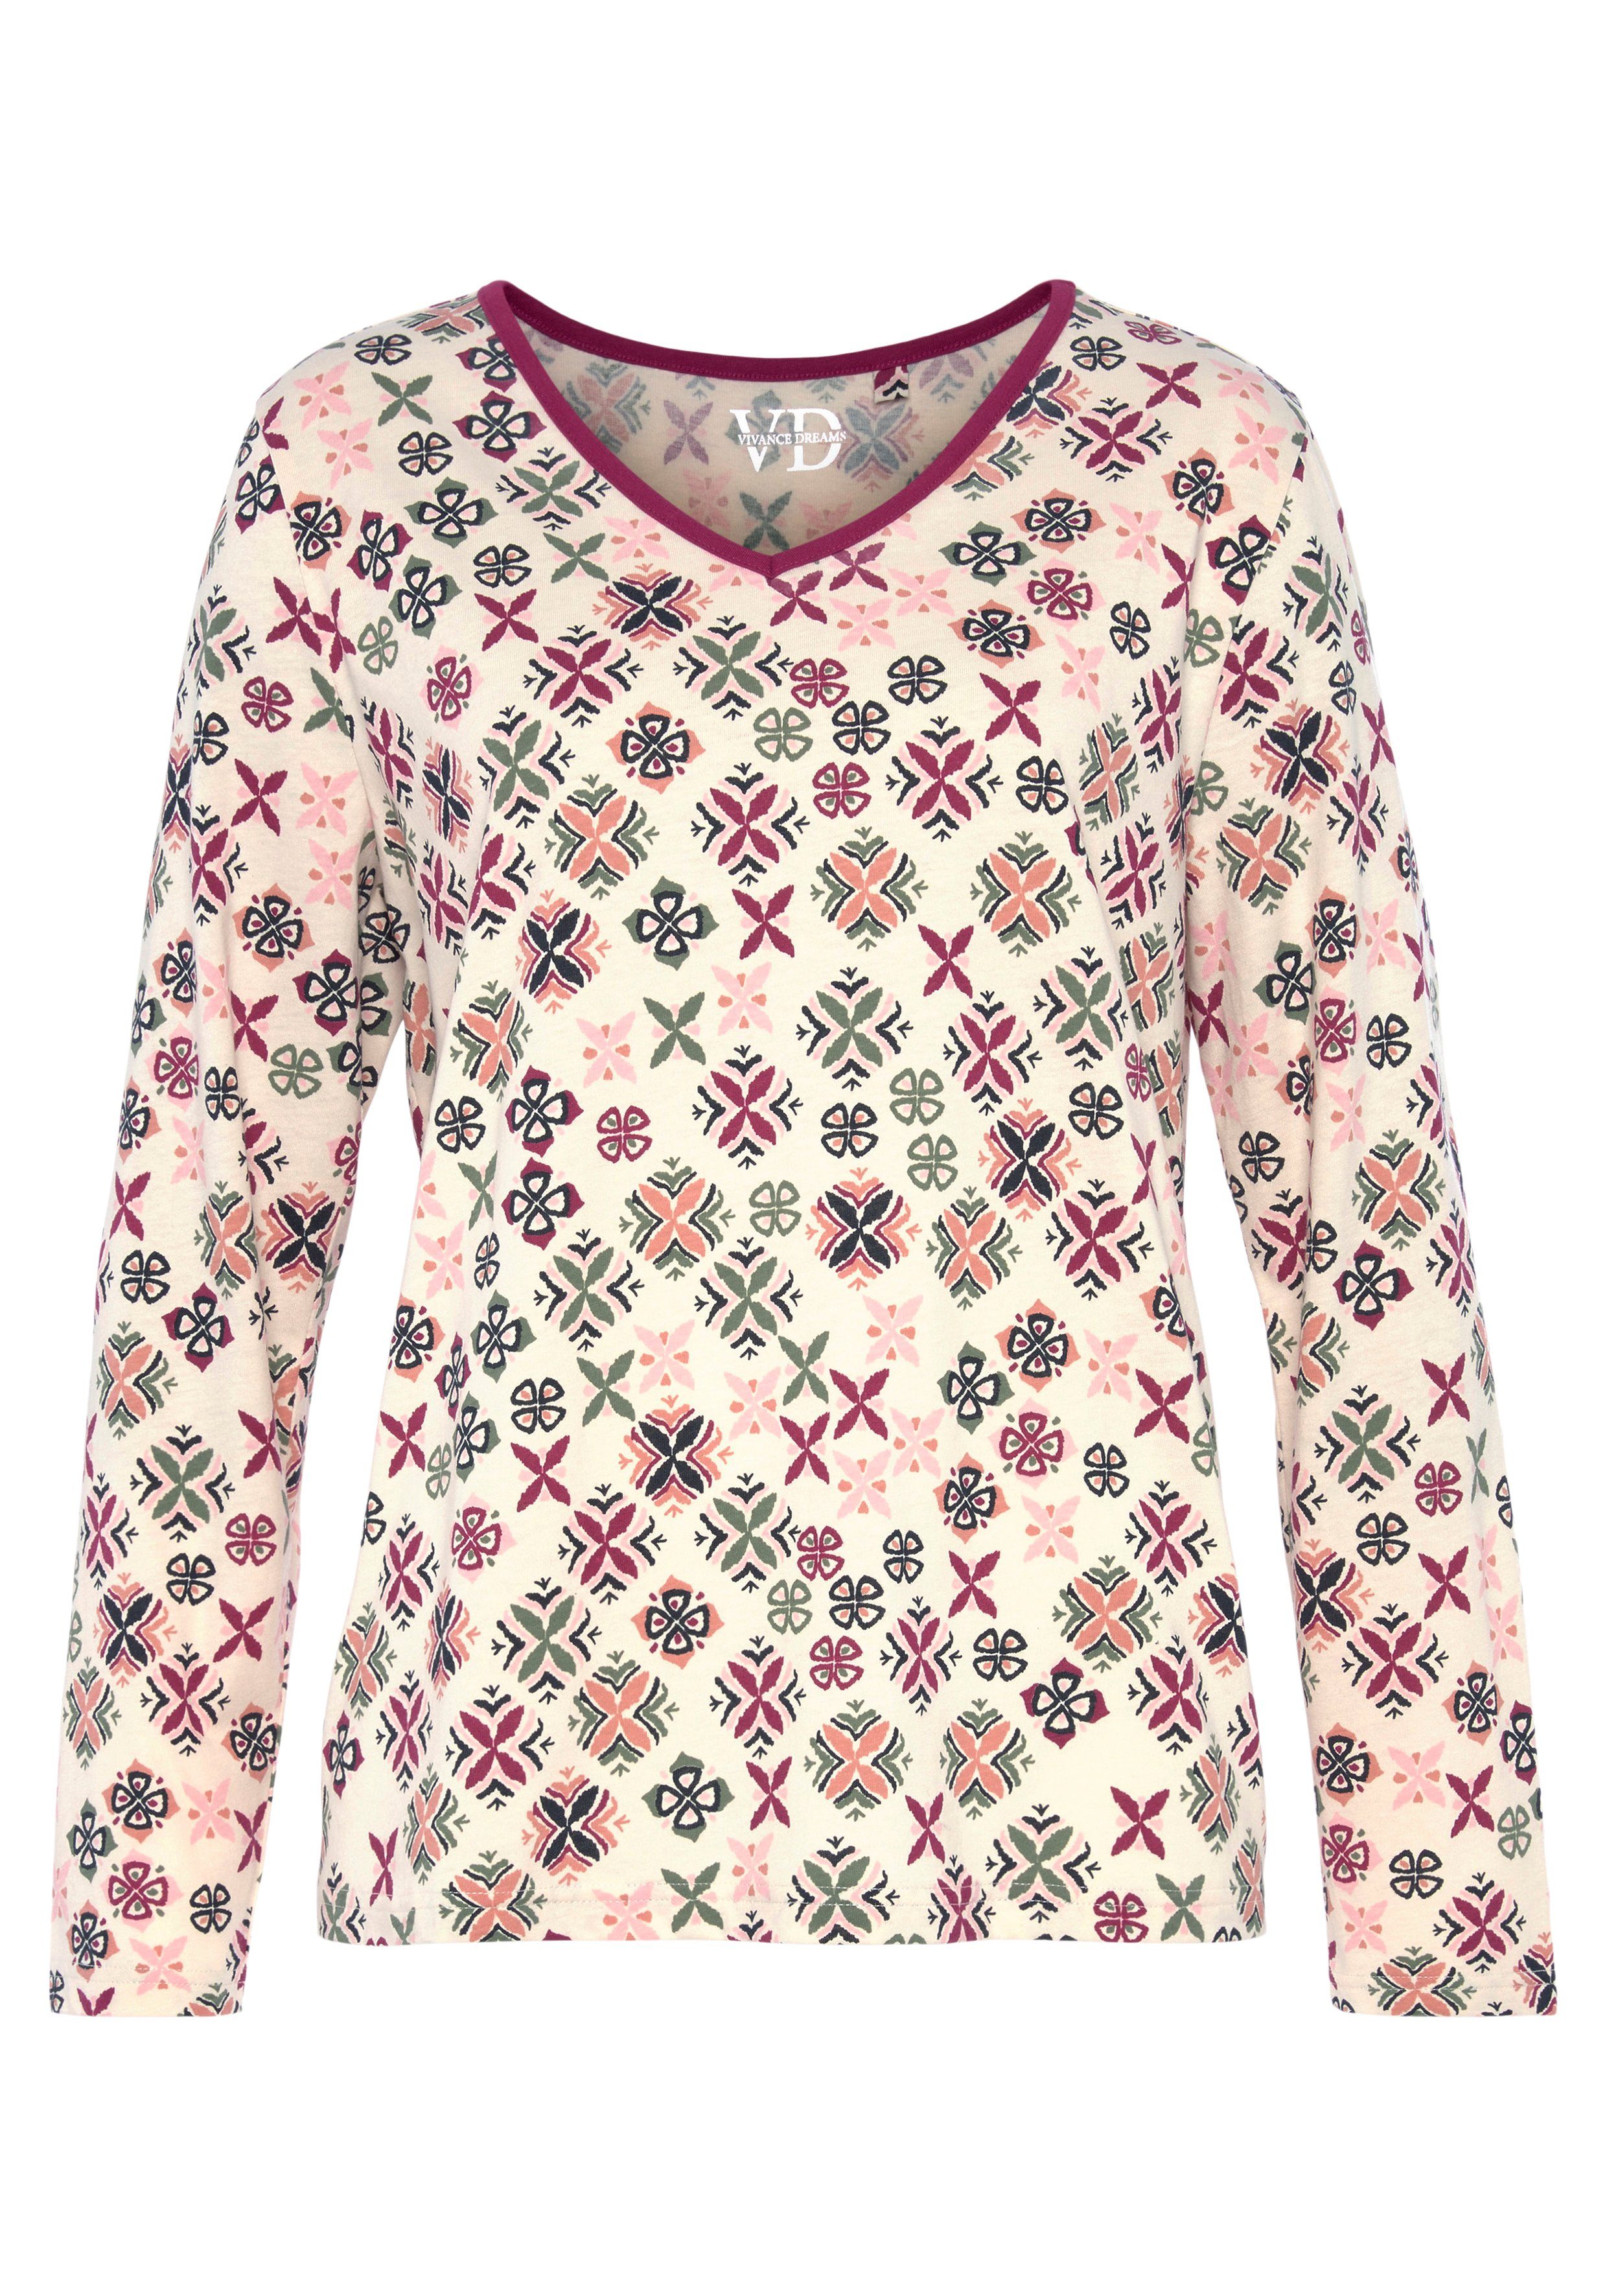 Alloverdruck Dreams Vivance burgunder-gemustert tlg) Pyjama (Packung, mit grafisch-floralem 2